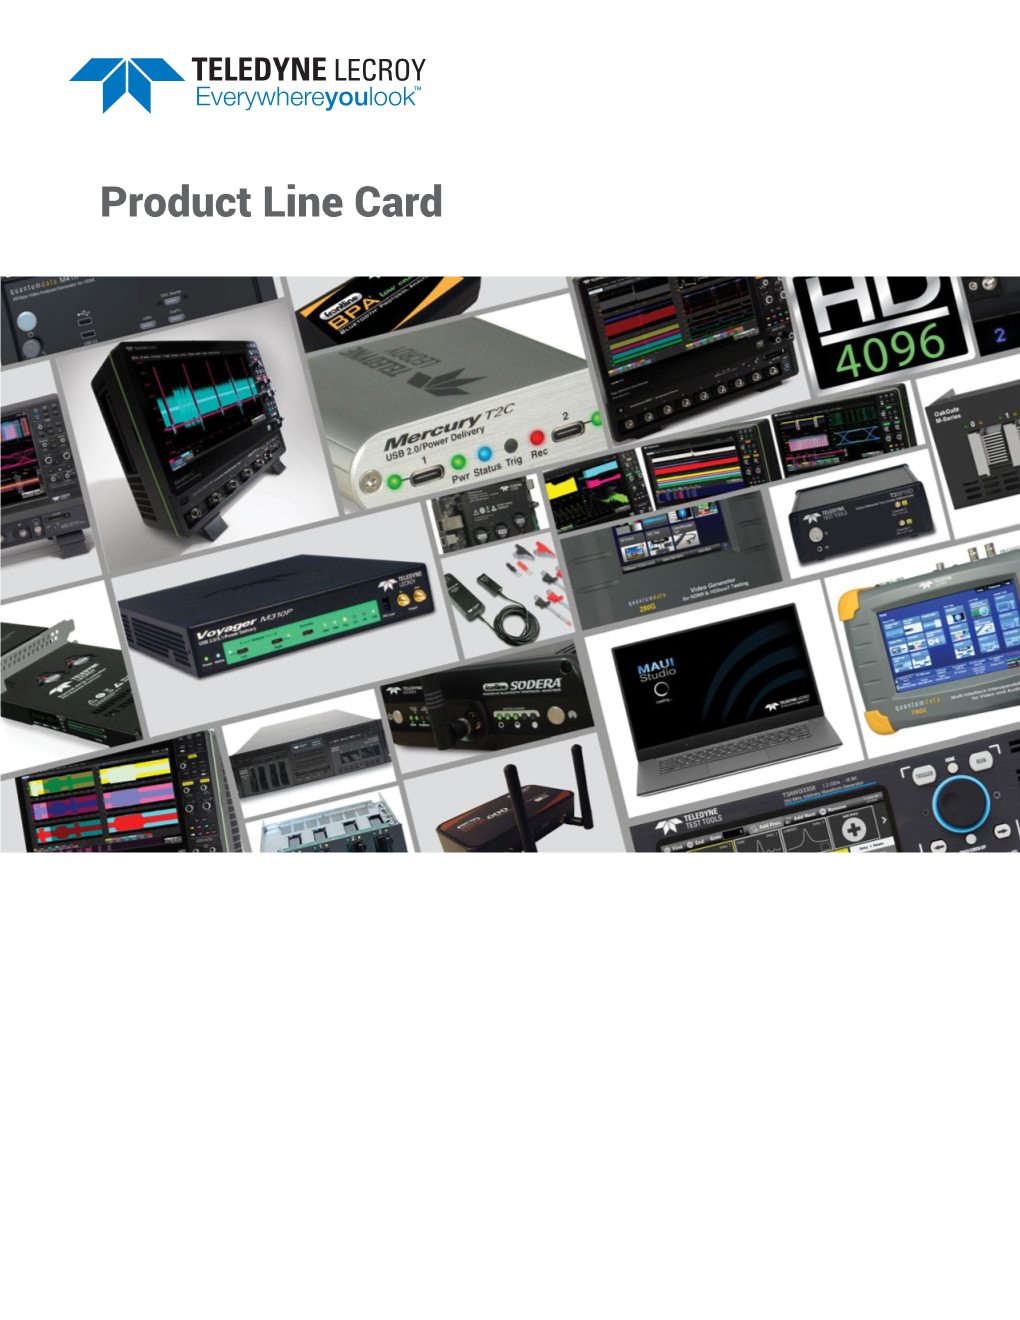 Teledyne Lecroy Product Line Card